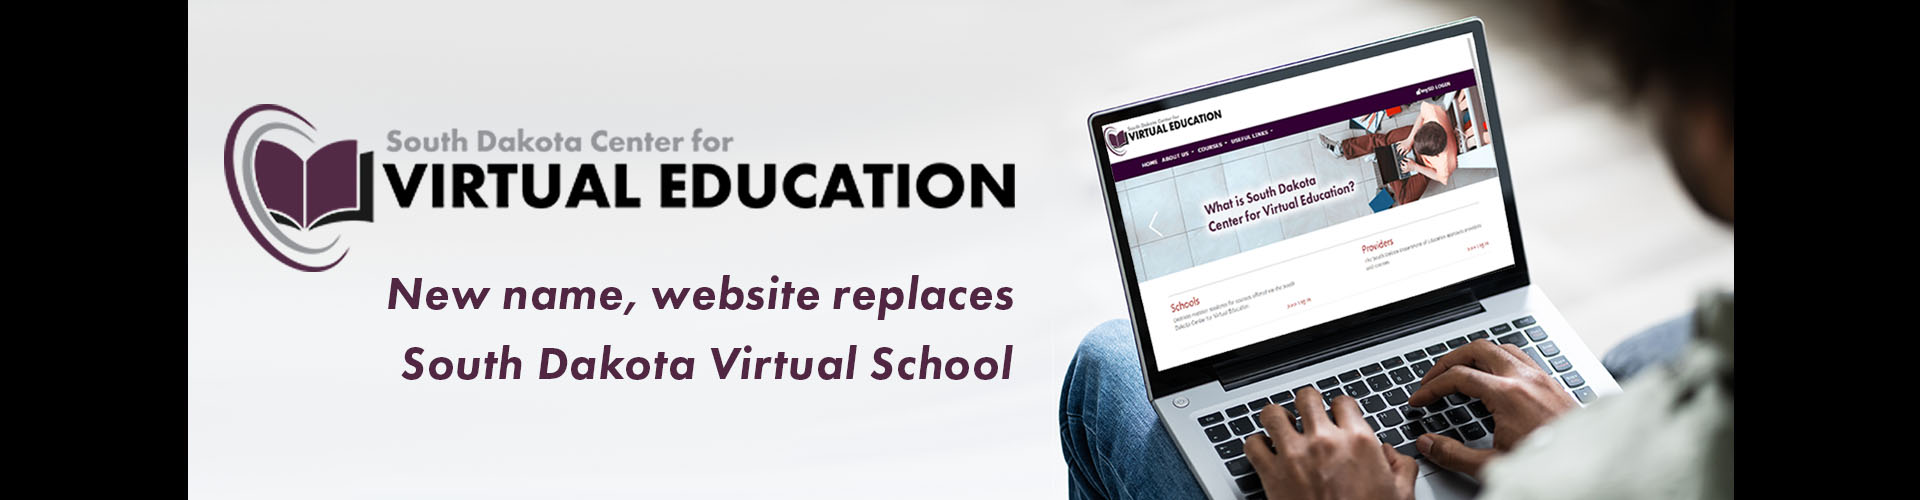 South Dakota Center for Virtual Education. New name, website replaces South Dakota Virtual School. Link.